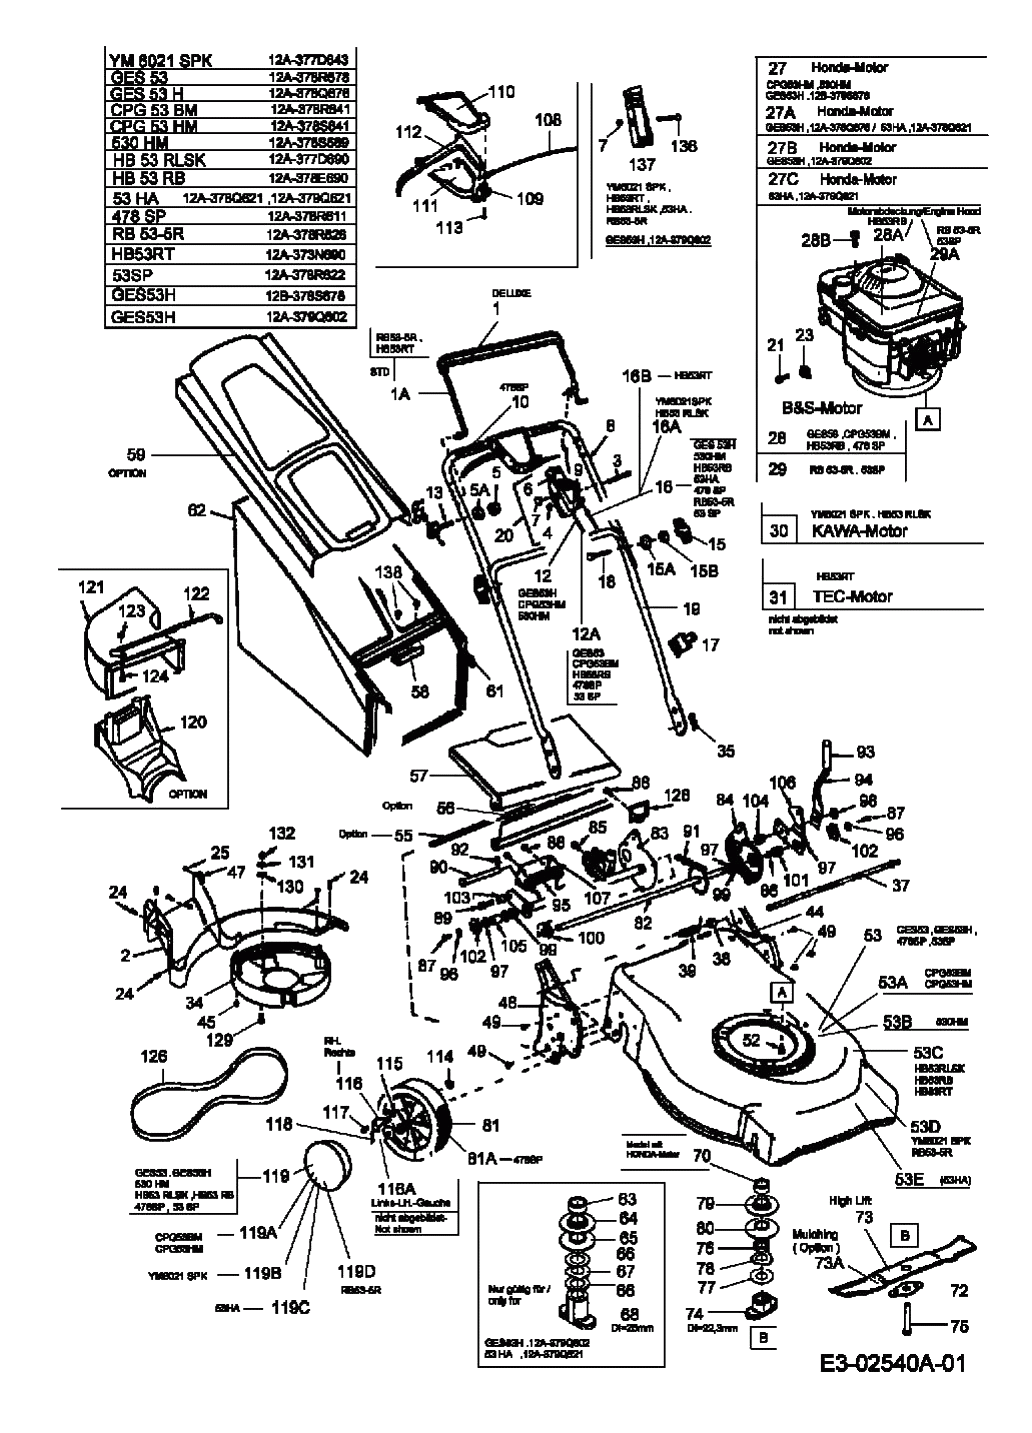 MTD Артикул 12B-378S678 (год выпуска 2005). Основная деталировка